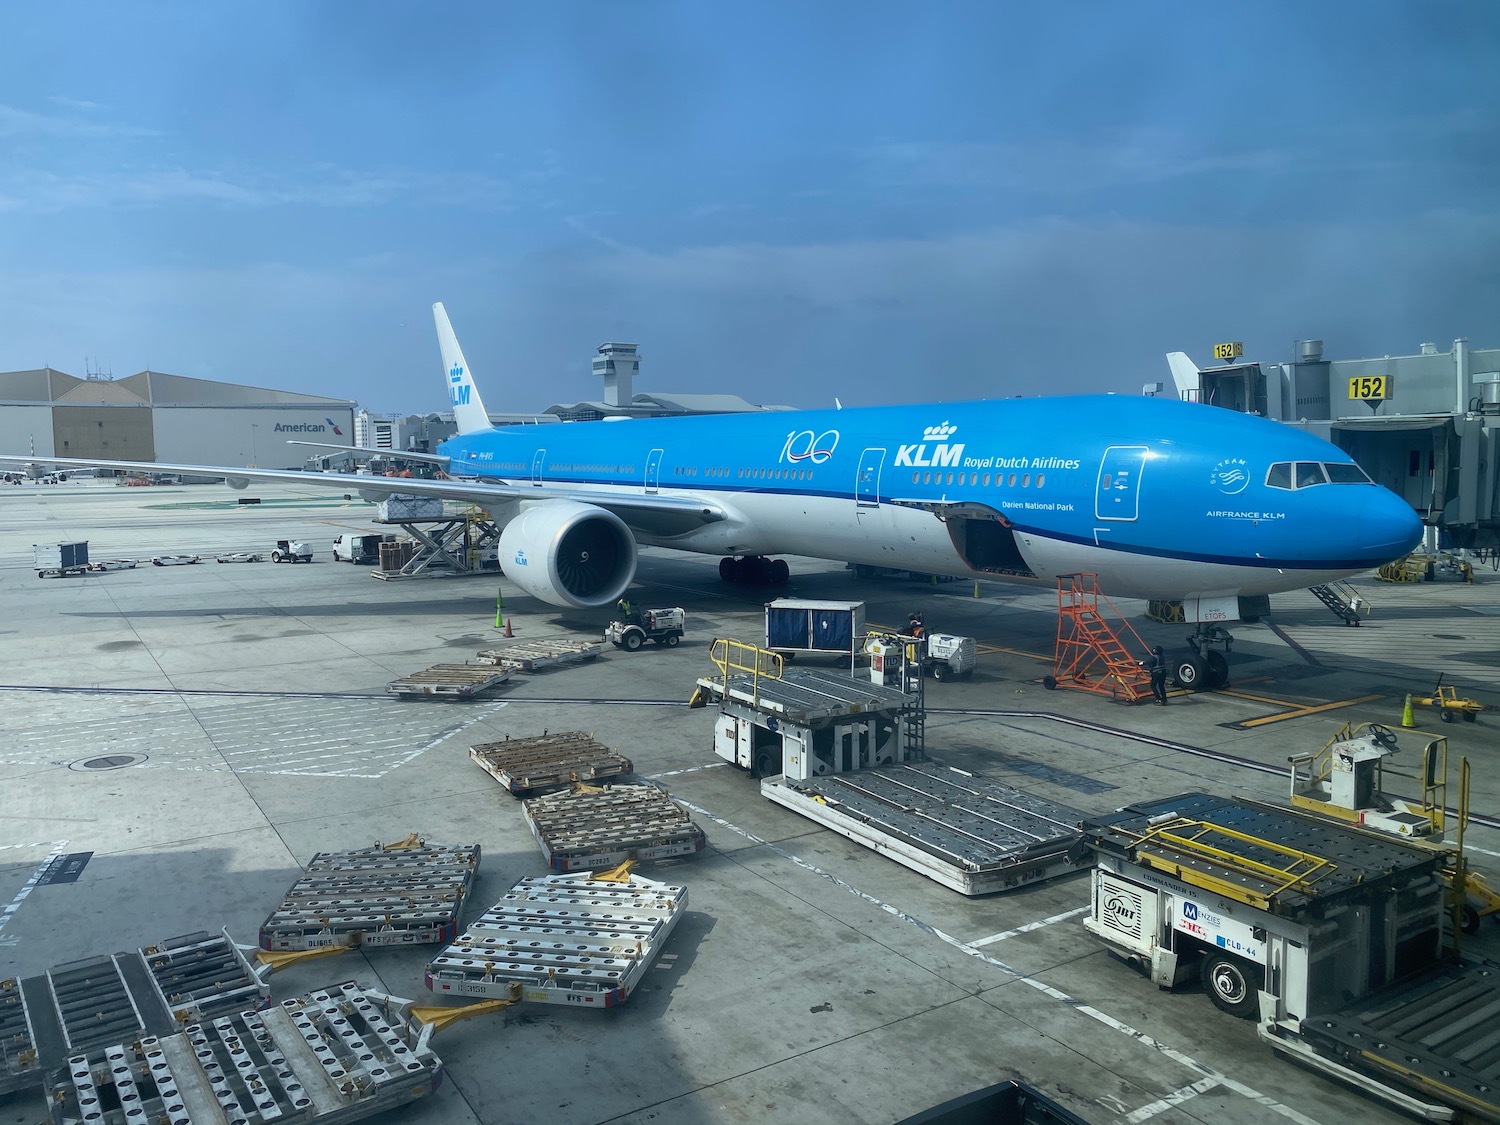 a blue airplane at an airport